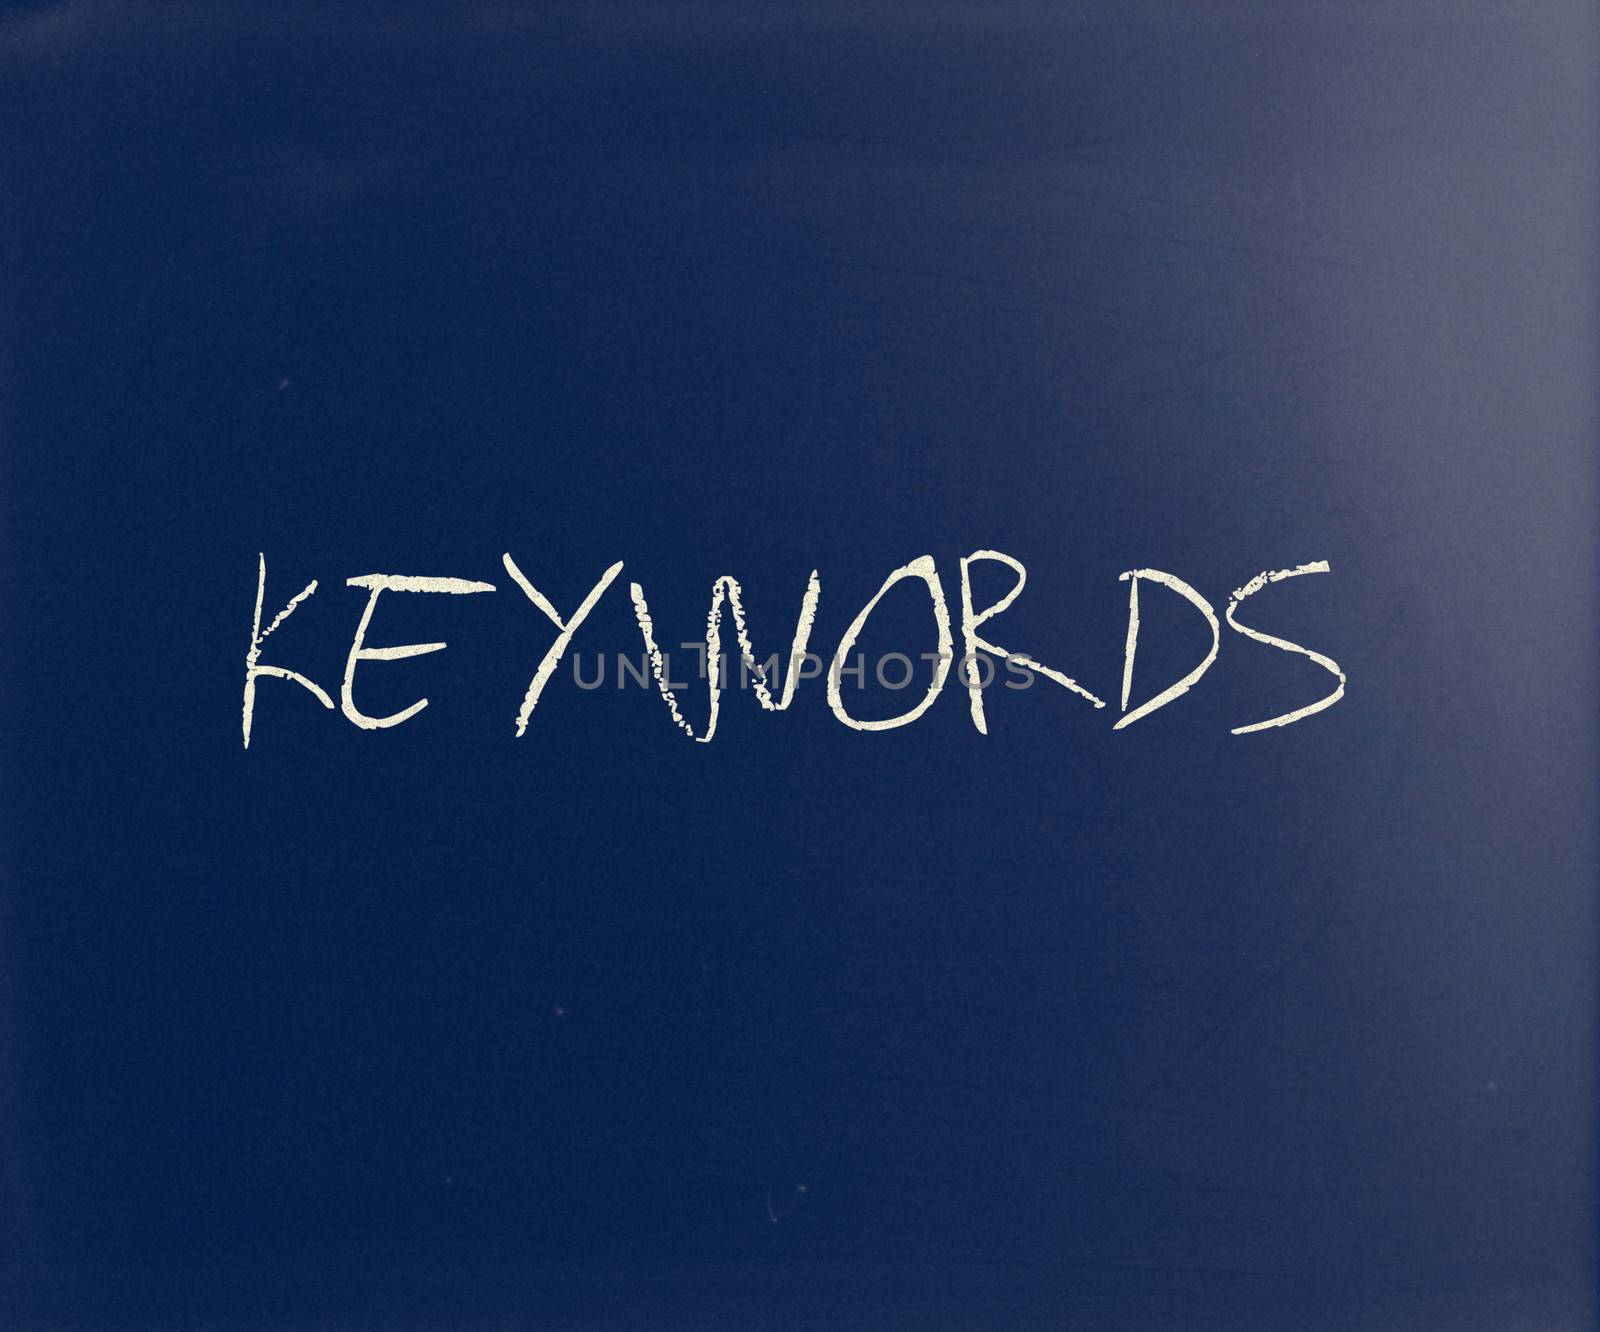 The word "Keywords" handwritten with white chalk on a blackboard by nenov